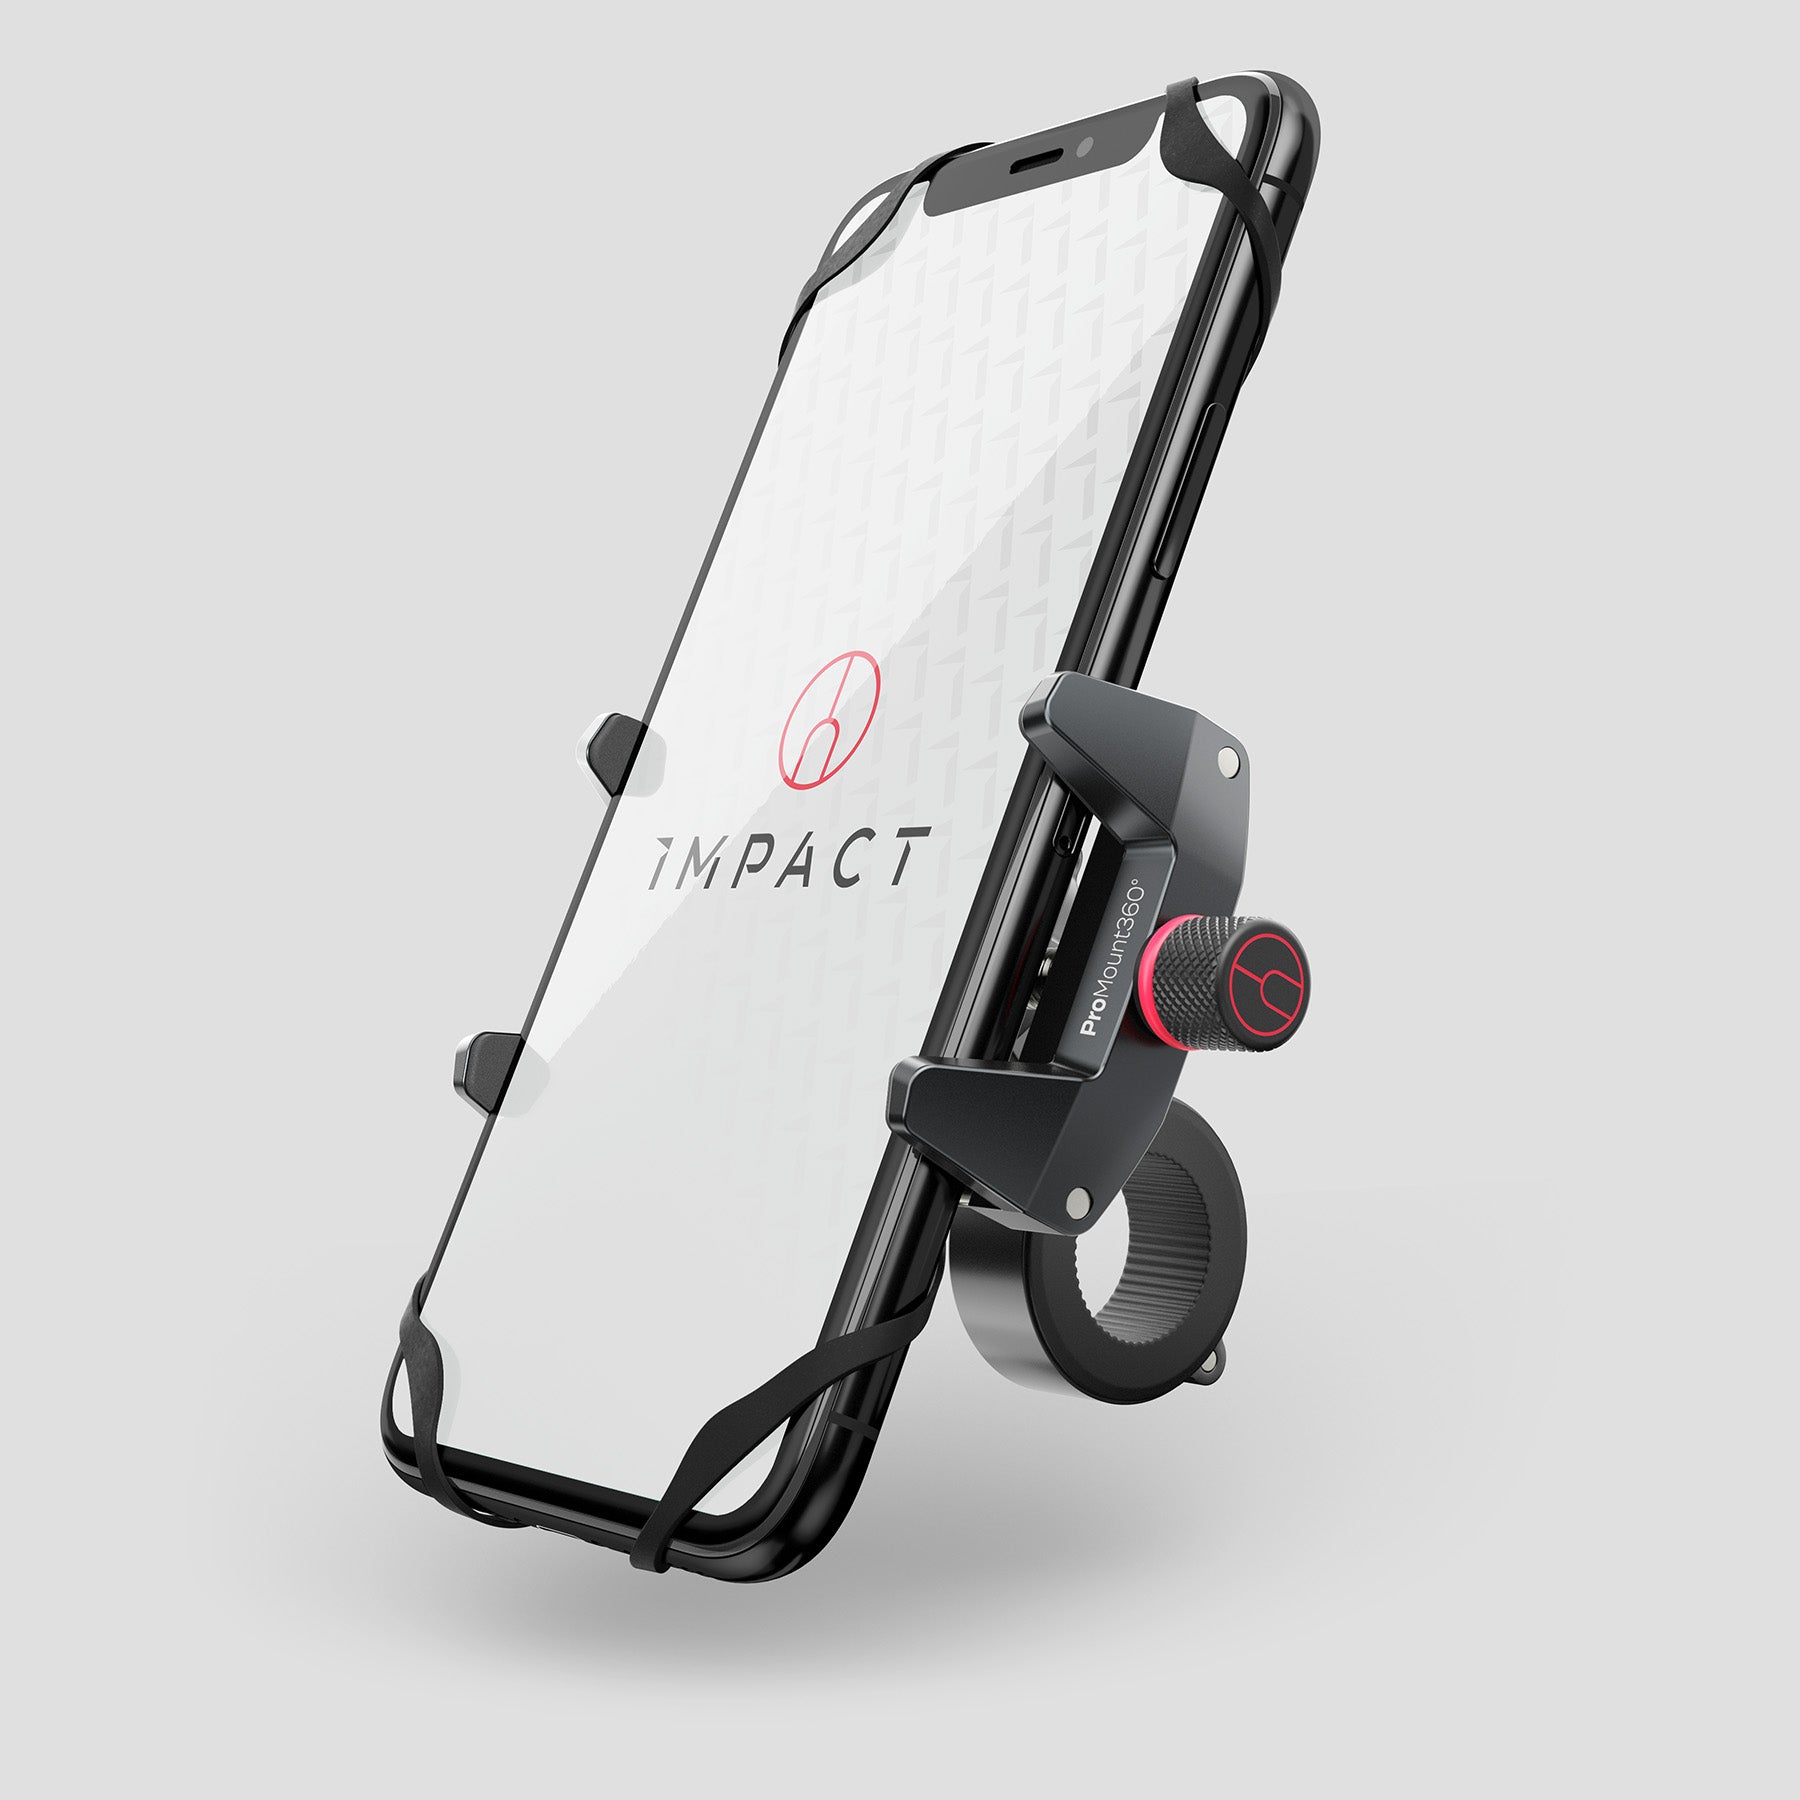 Kaufe Fahrrad-Telefonhalter für iPhone, Samsung, Motorrad-Handy